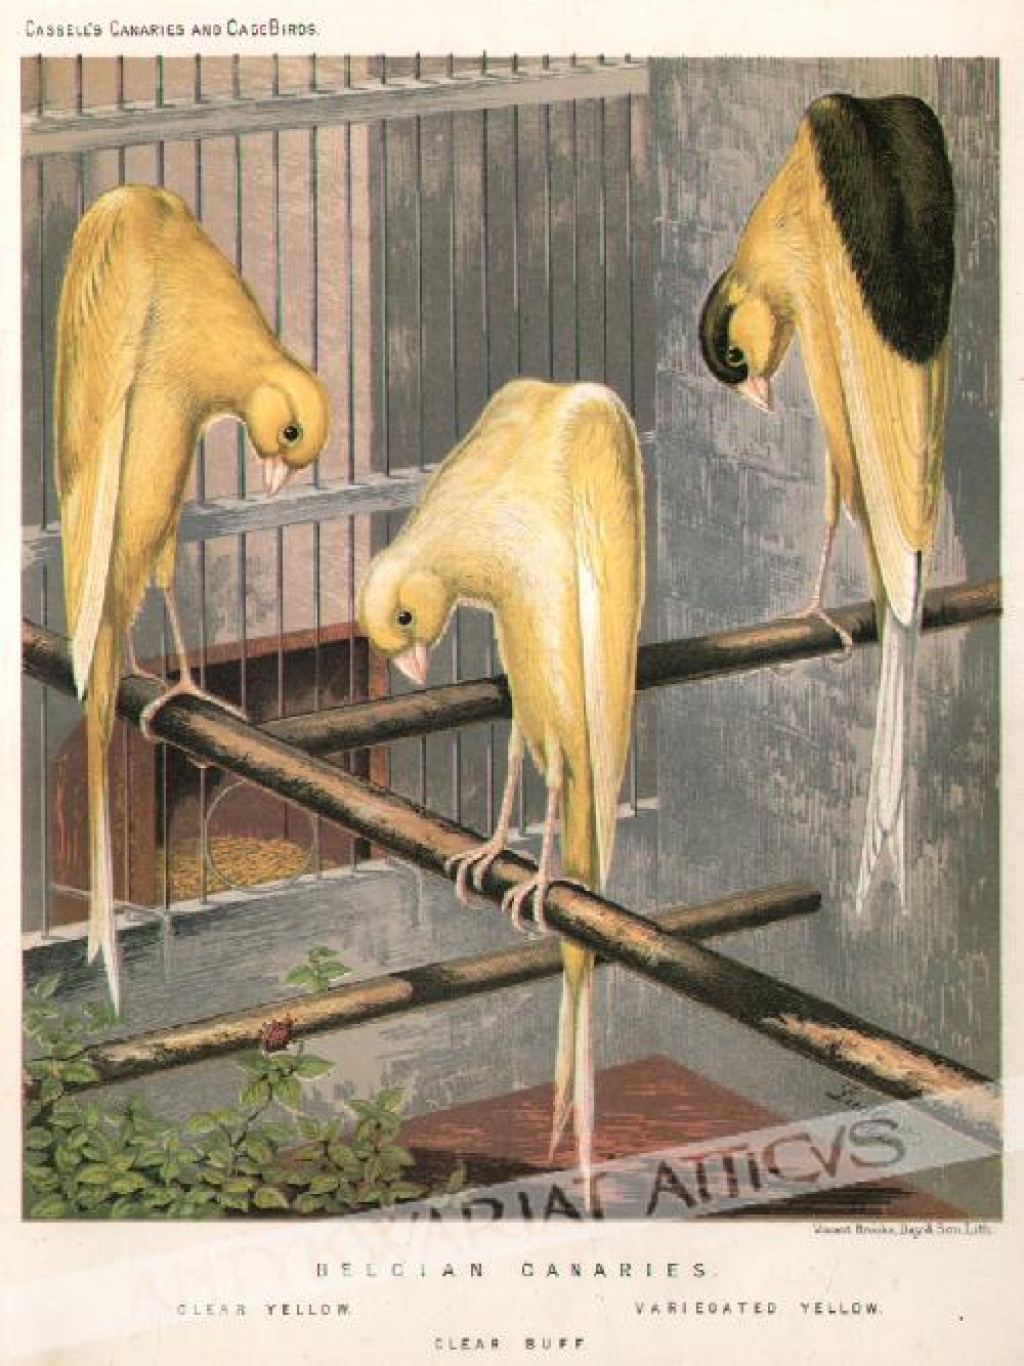 [rycina, ok. 1880] Belgian Canaries [kanarki] 1. Clear Yellow 2. Clear Buff3. Variegated Yellow